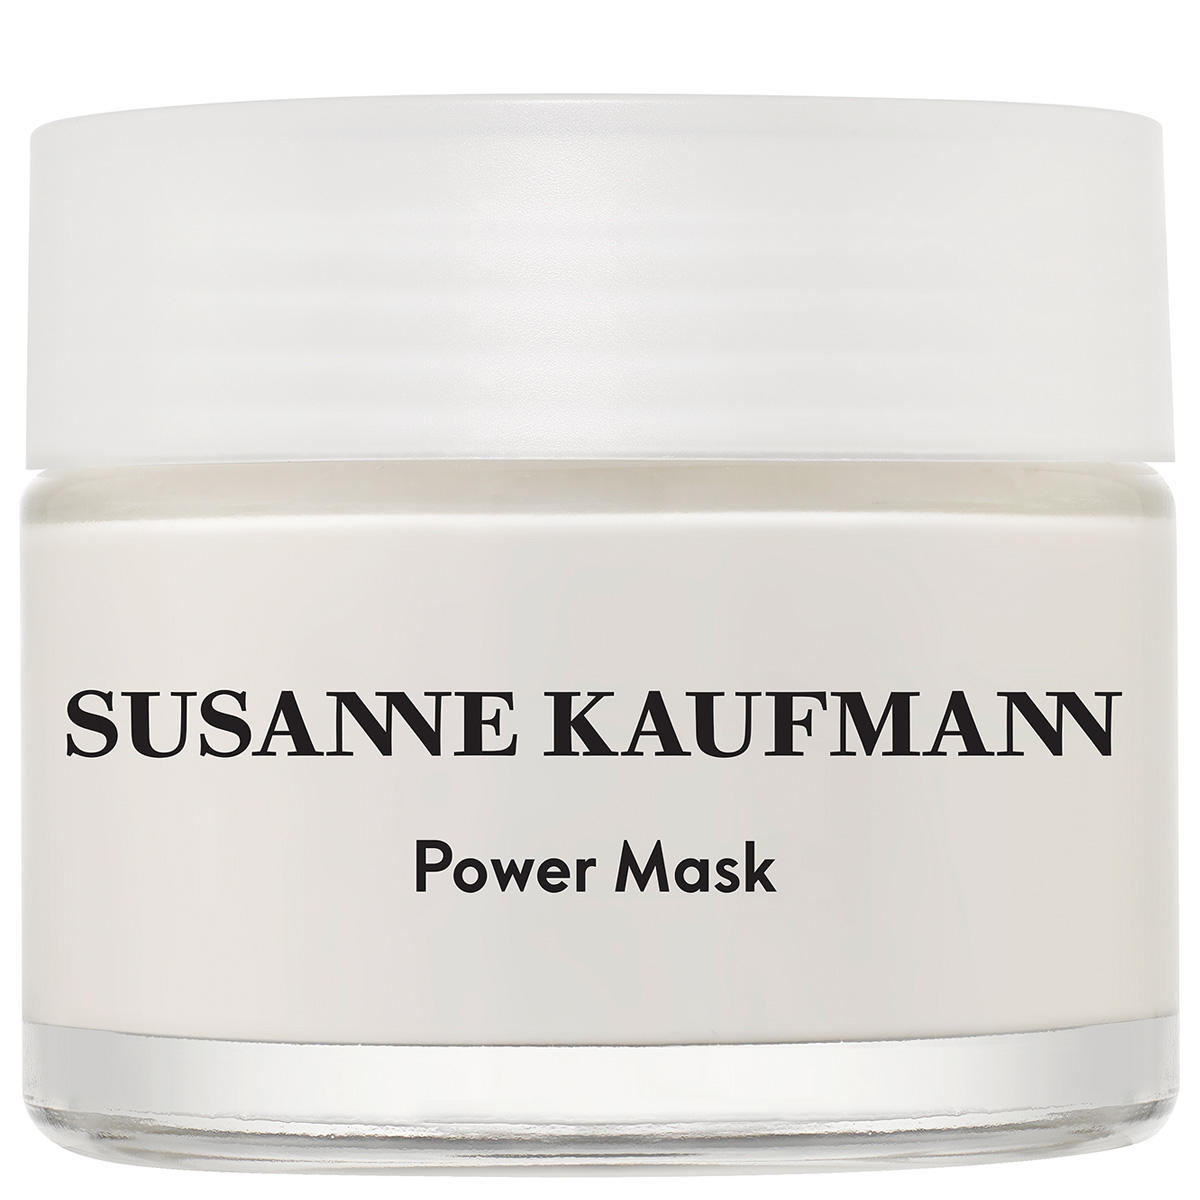 Susanne Kaufmann Levage du masque ligne A - Power Mask 50 ml - 1